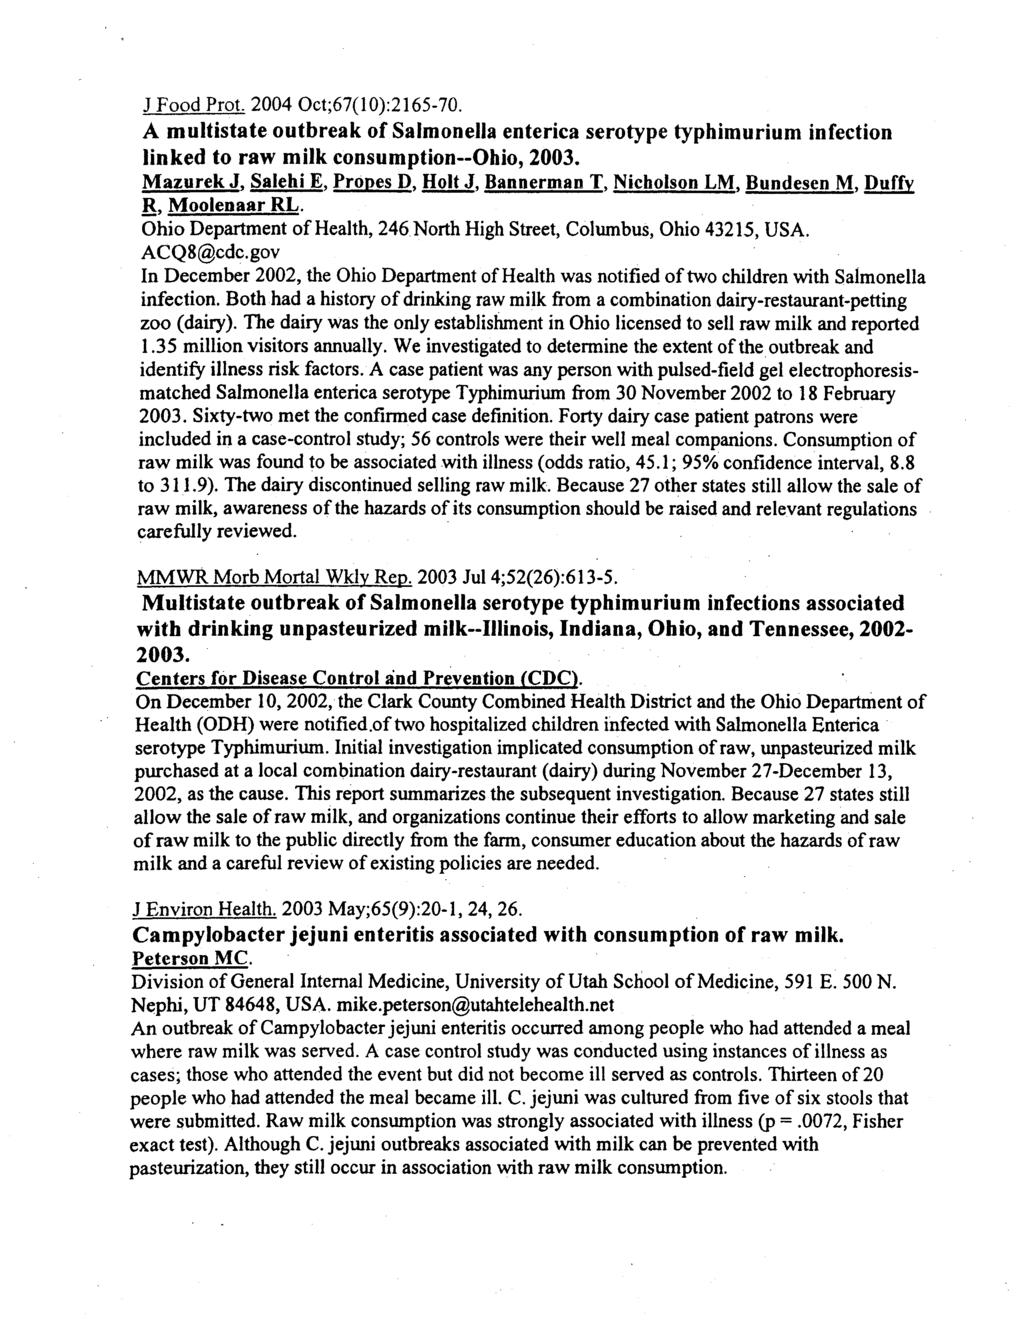 J Food Prot. 2004 Oct;67(10):2165-70. A multistate outbreak of Salmonella enterica serotype typhimurium infection linked to raw milk consumption Ohio, 2003. Mazurek J.